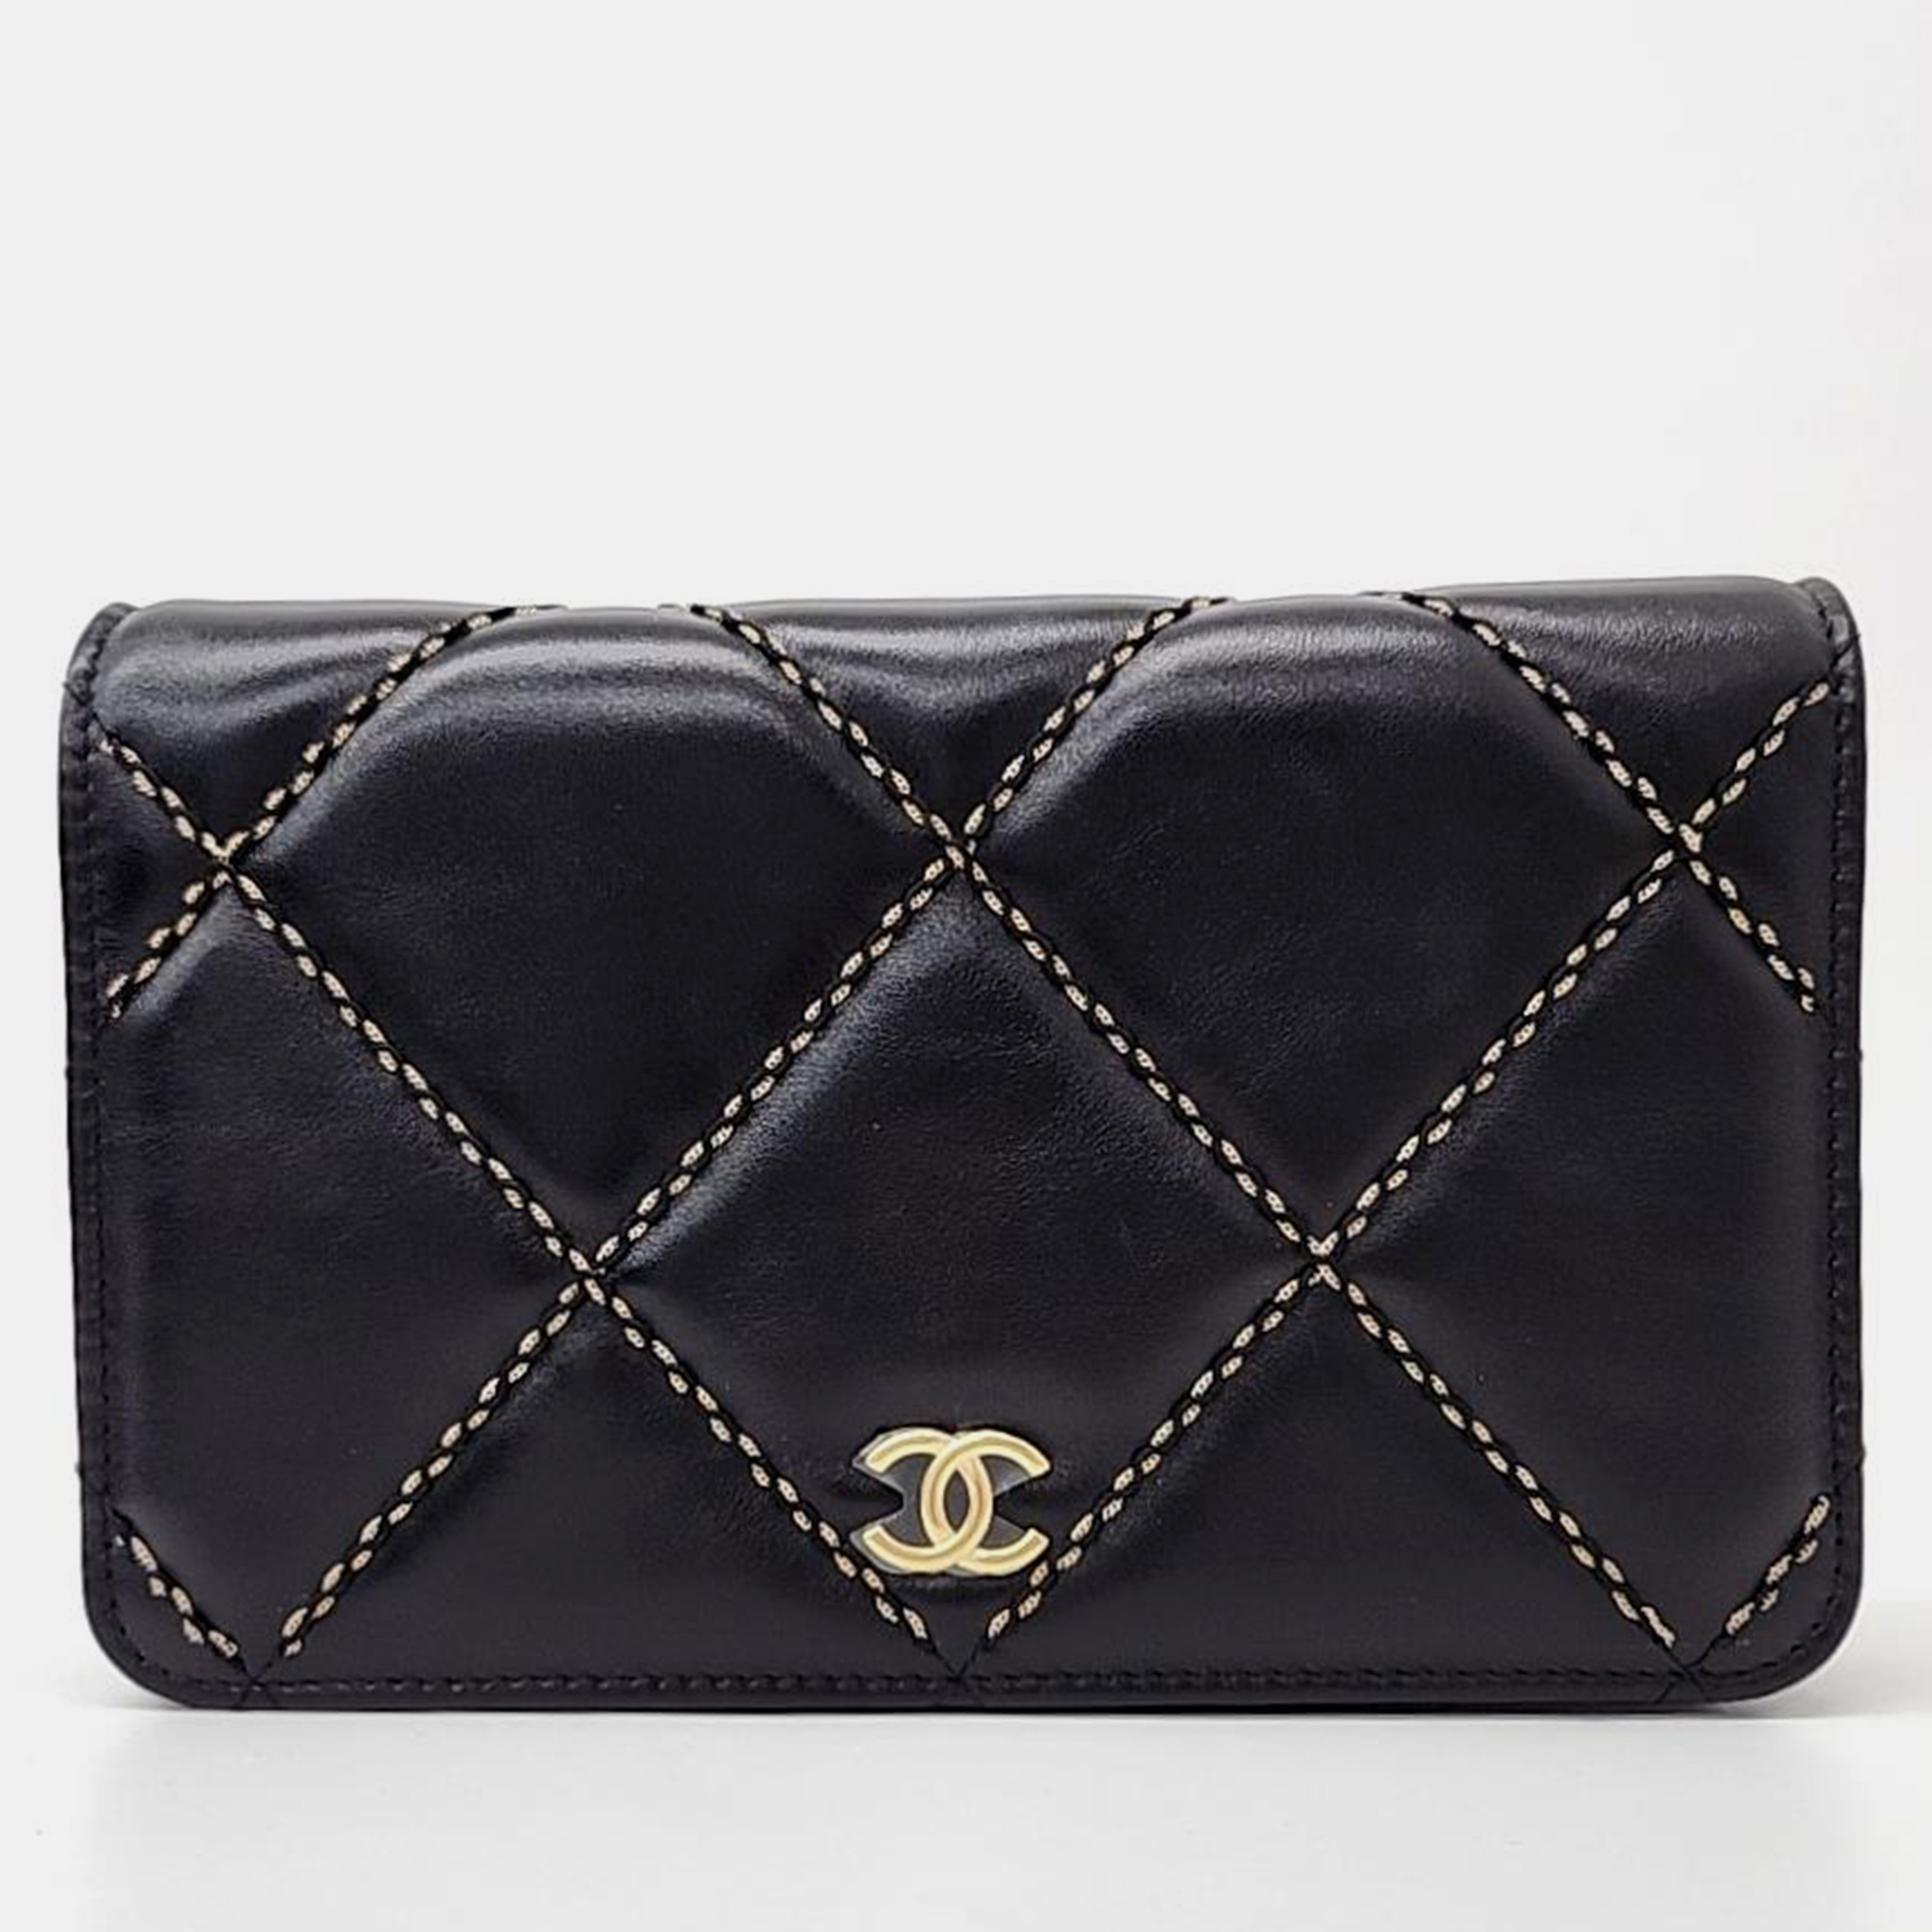 Chanel black leather wild stitch wallet on chain